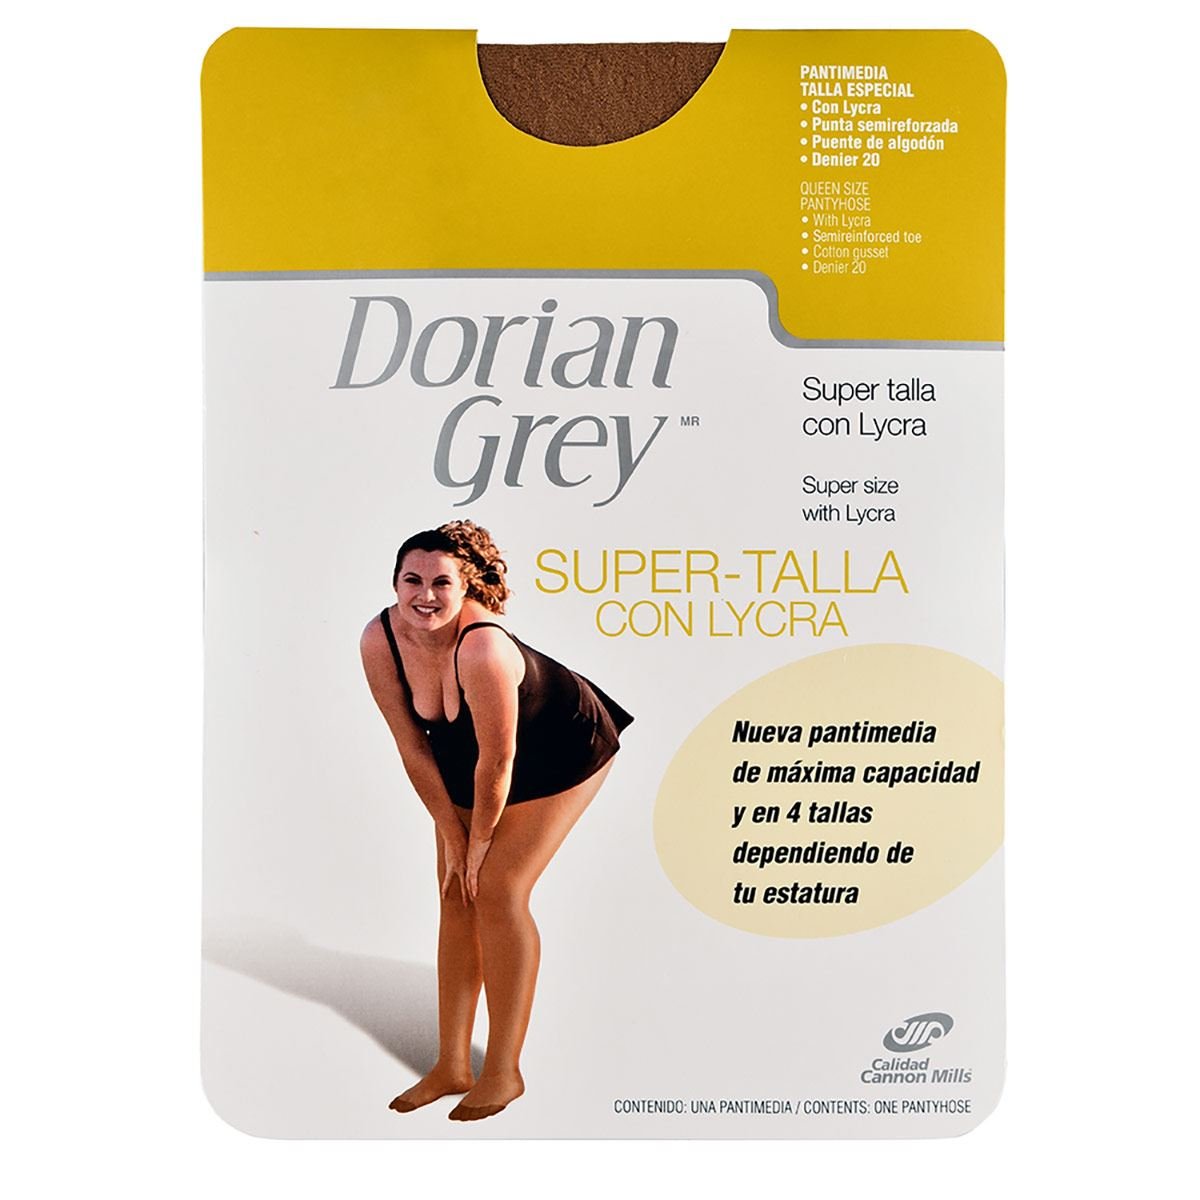 Pantimedia Dorian Grey super talla punta semireforzada 4012 extragrande juvenil dama